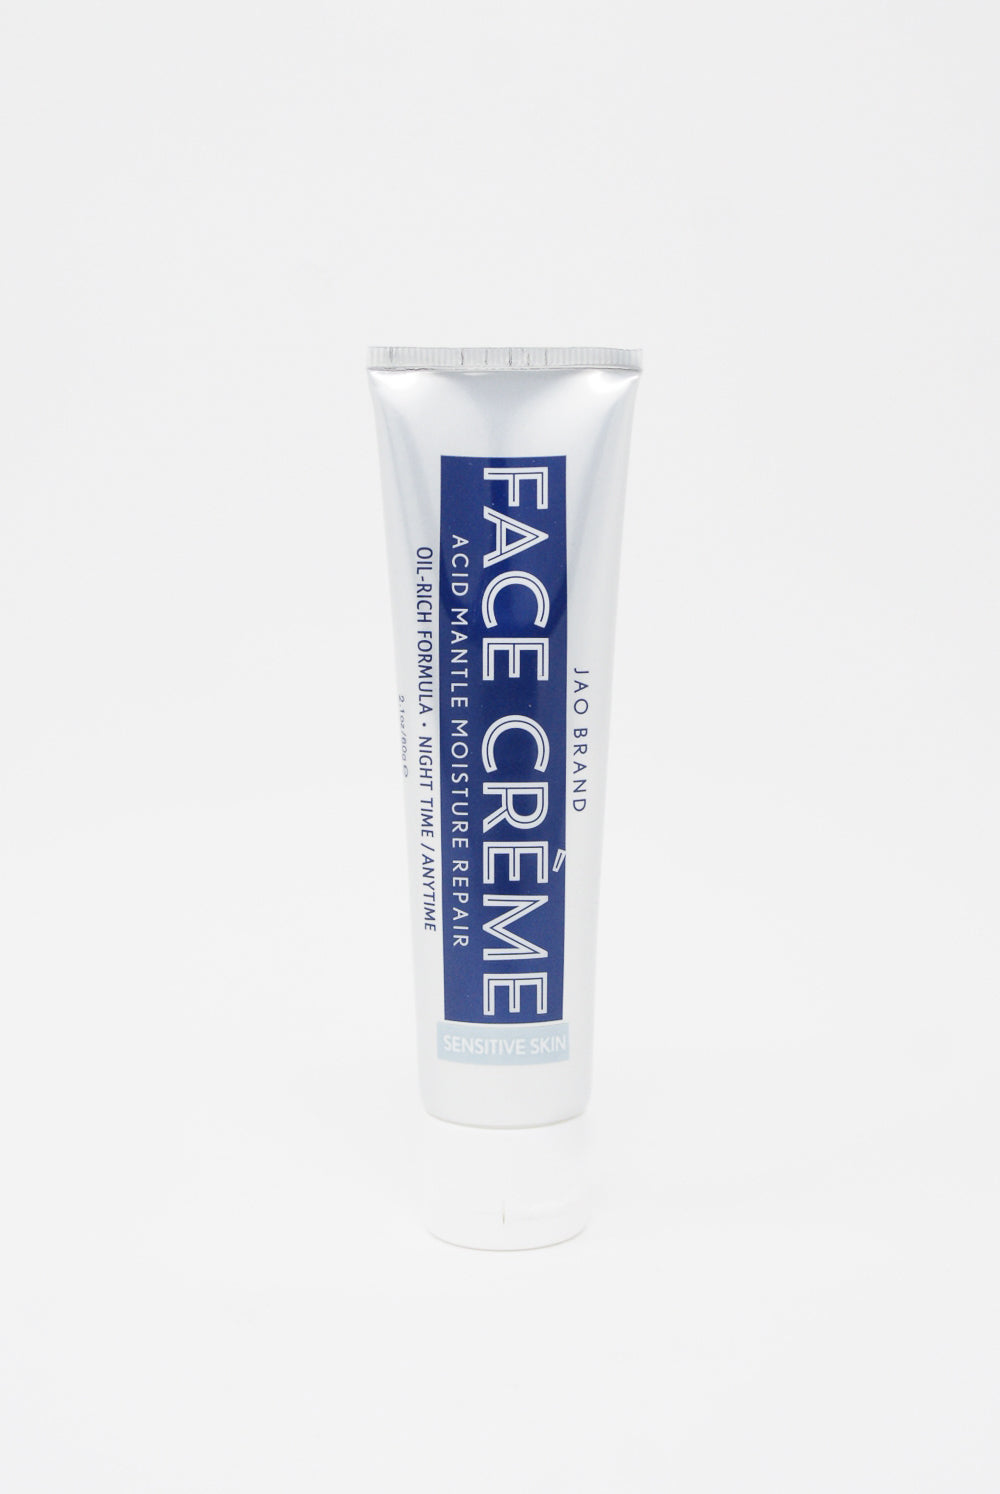 Jao Face Crème - Phytoceramide Acid Mantle Moisture Repair for Sensitive Skin